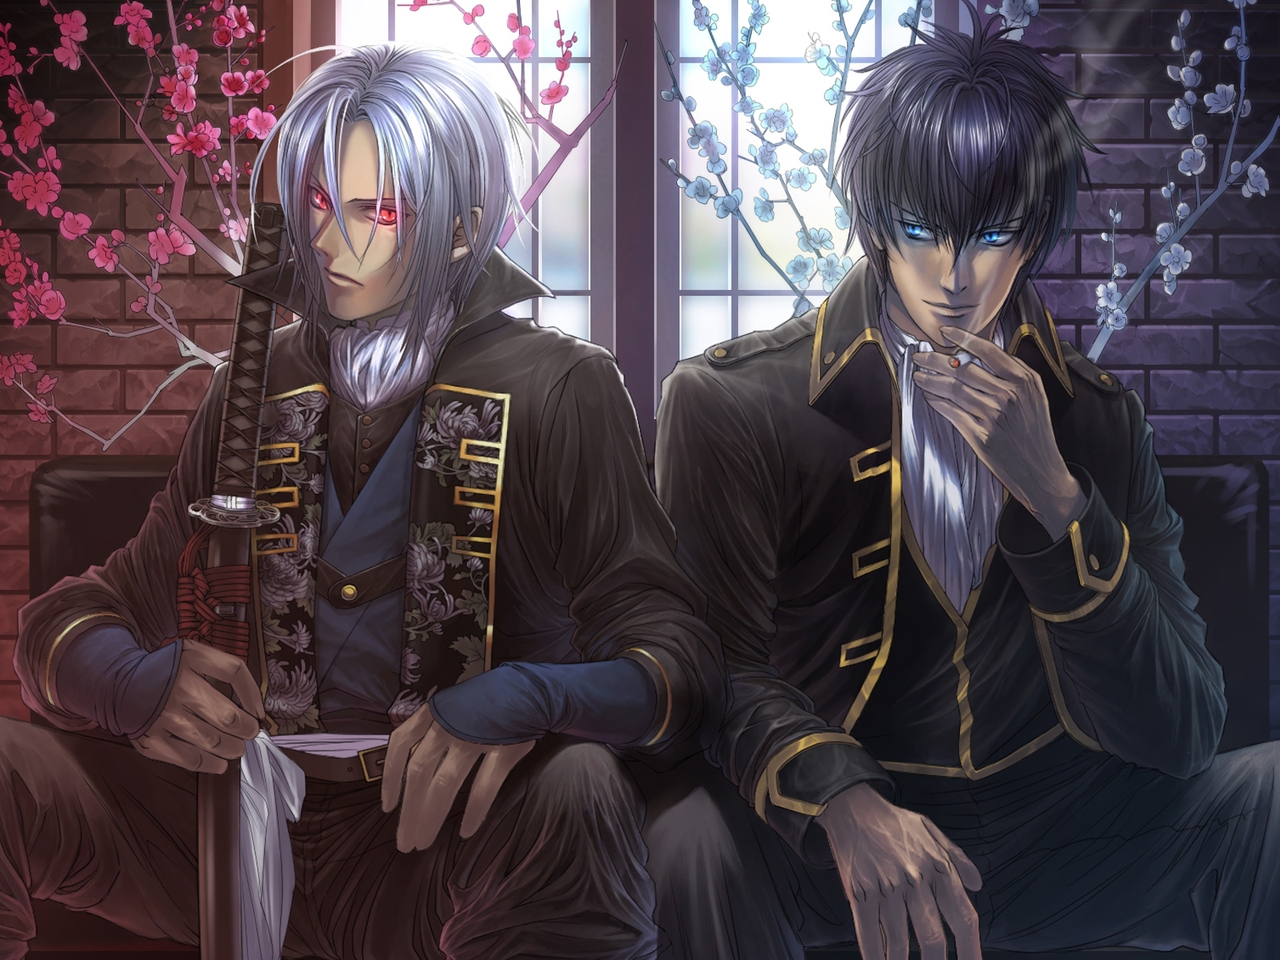 Image: Gintama, boys, Hijikata Toshizou, Hijikata Toushirou, sitting, sword, katana, Demons pale cherry, smoke, flowers, window